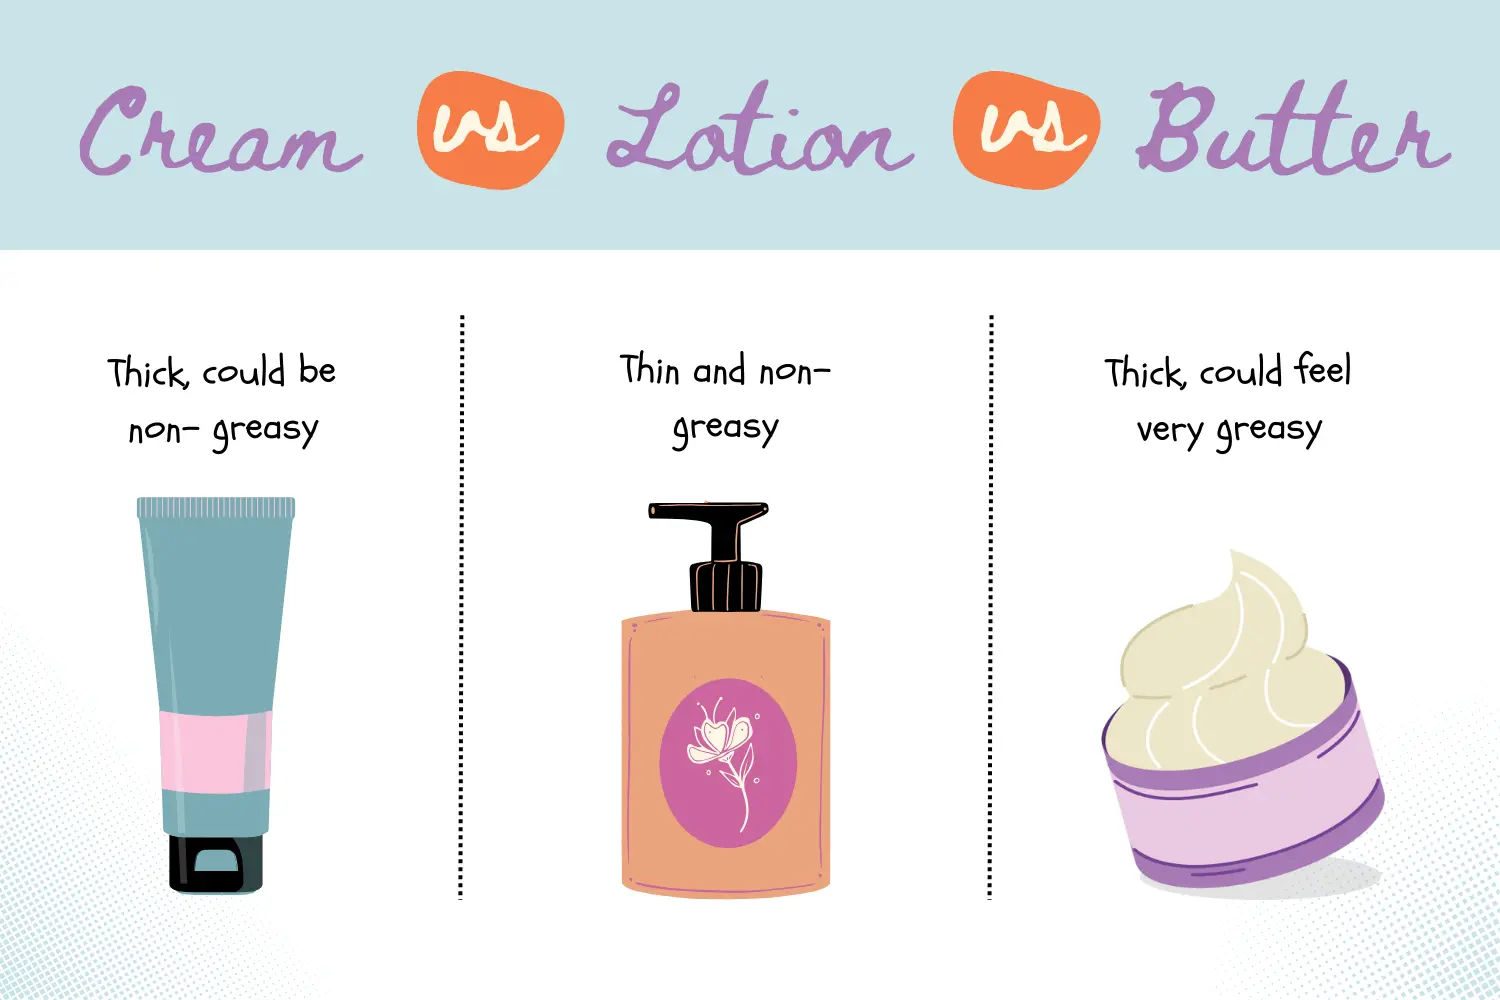 Body Cream vs Lotion vs Butter